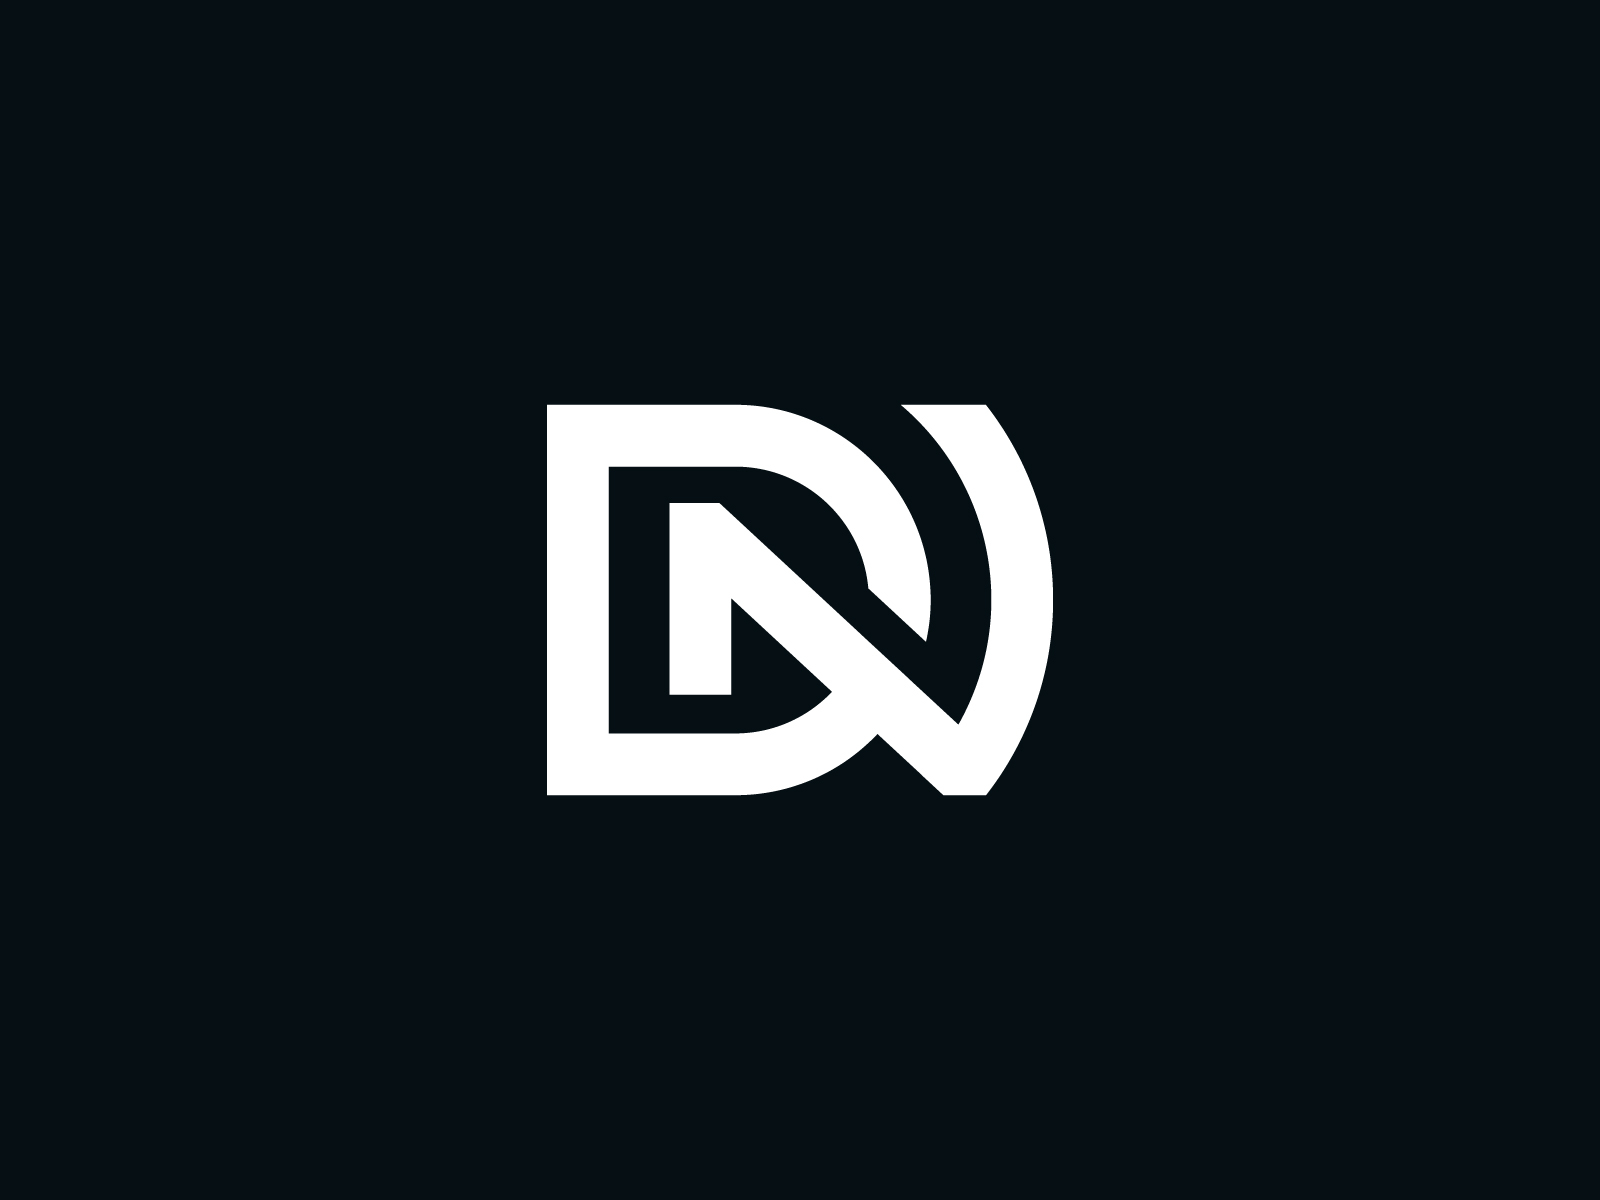 coreldraw DN logo design - YouTube